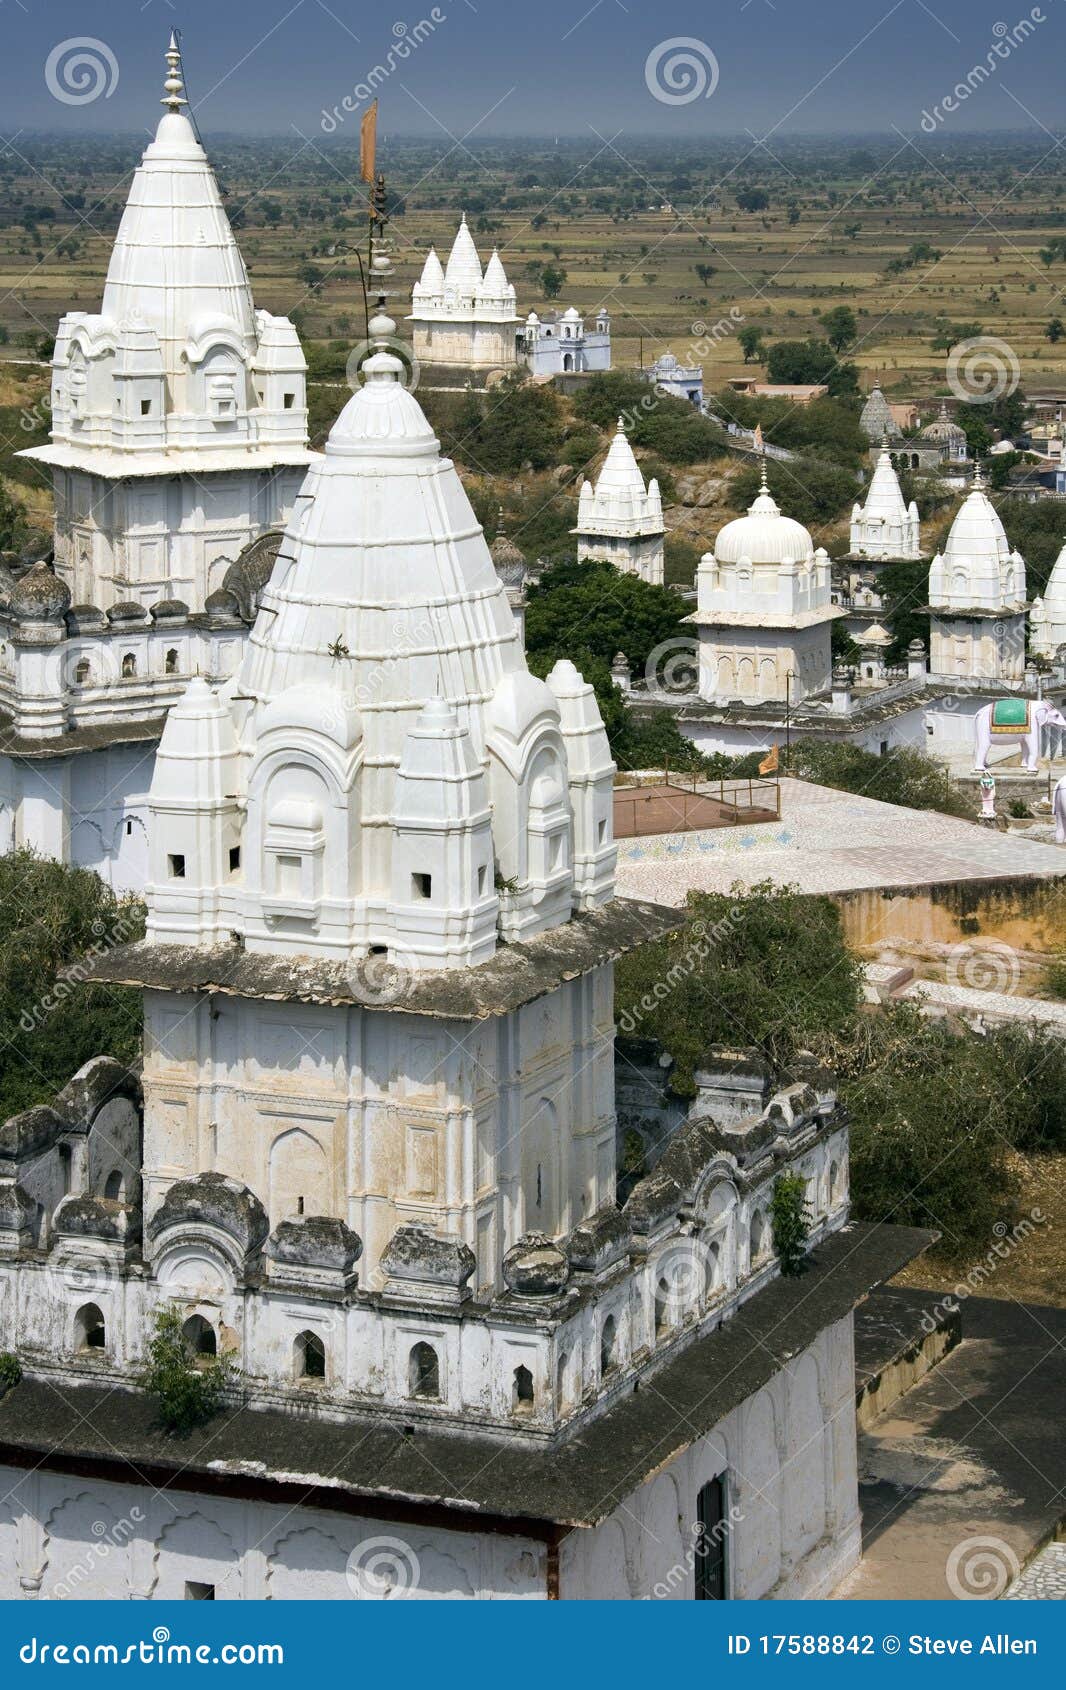 jain temples - sonagiri - india